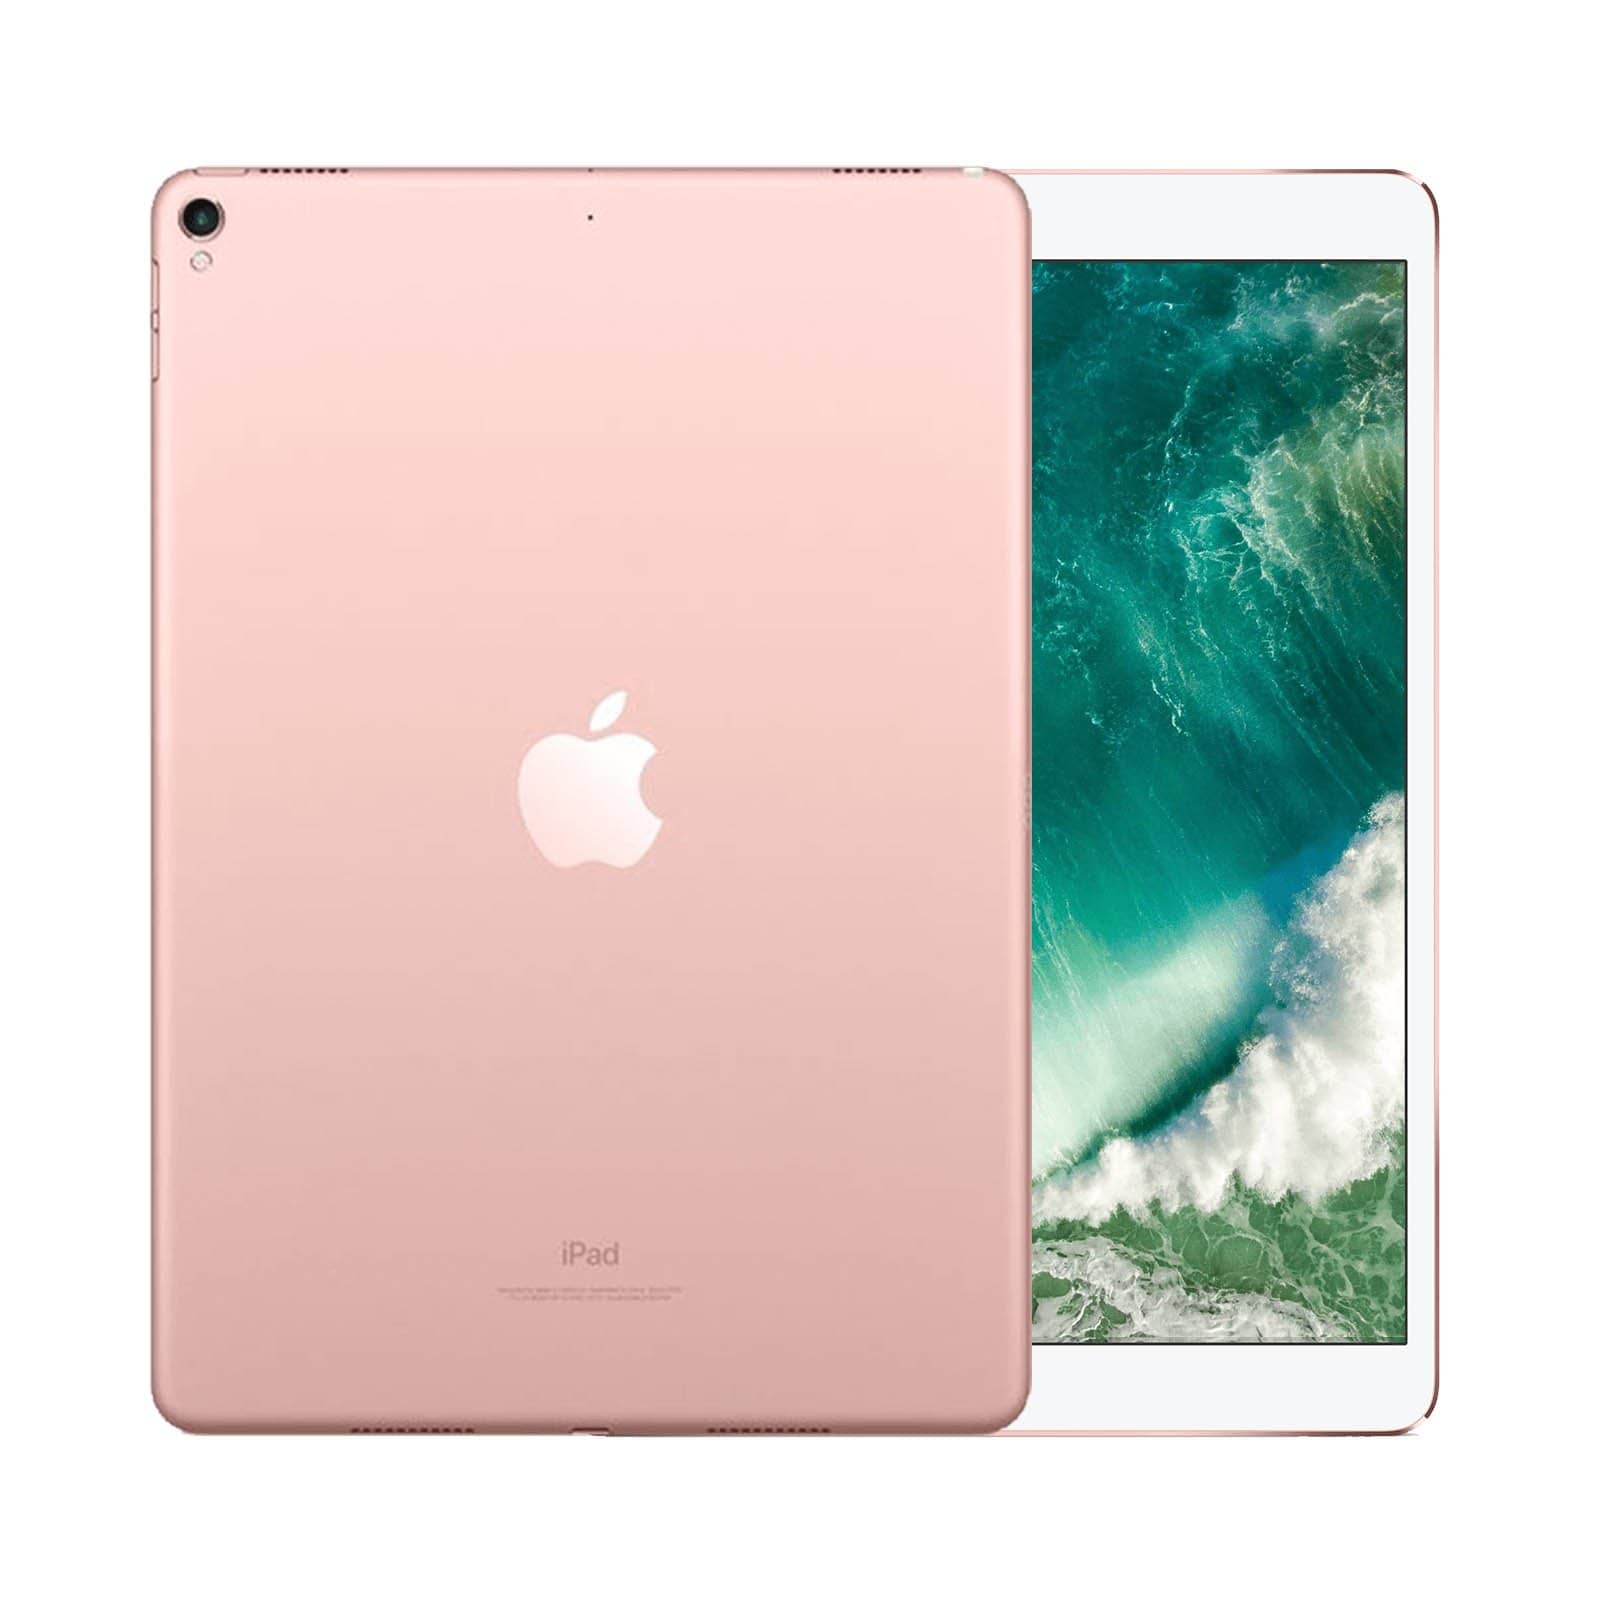 iPad Pro 10.5 Inch 512GB Rose Gold Good - WiFi 512GB Rose Gold Good